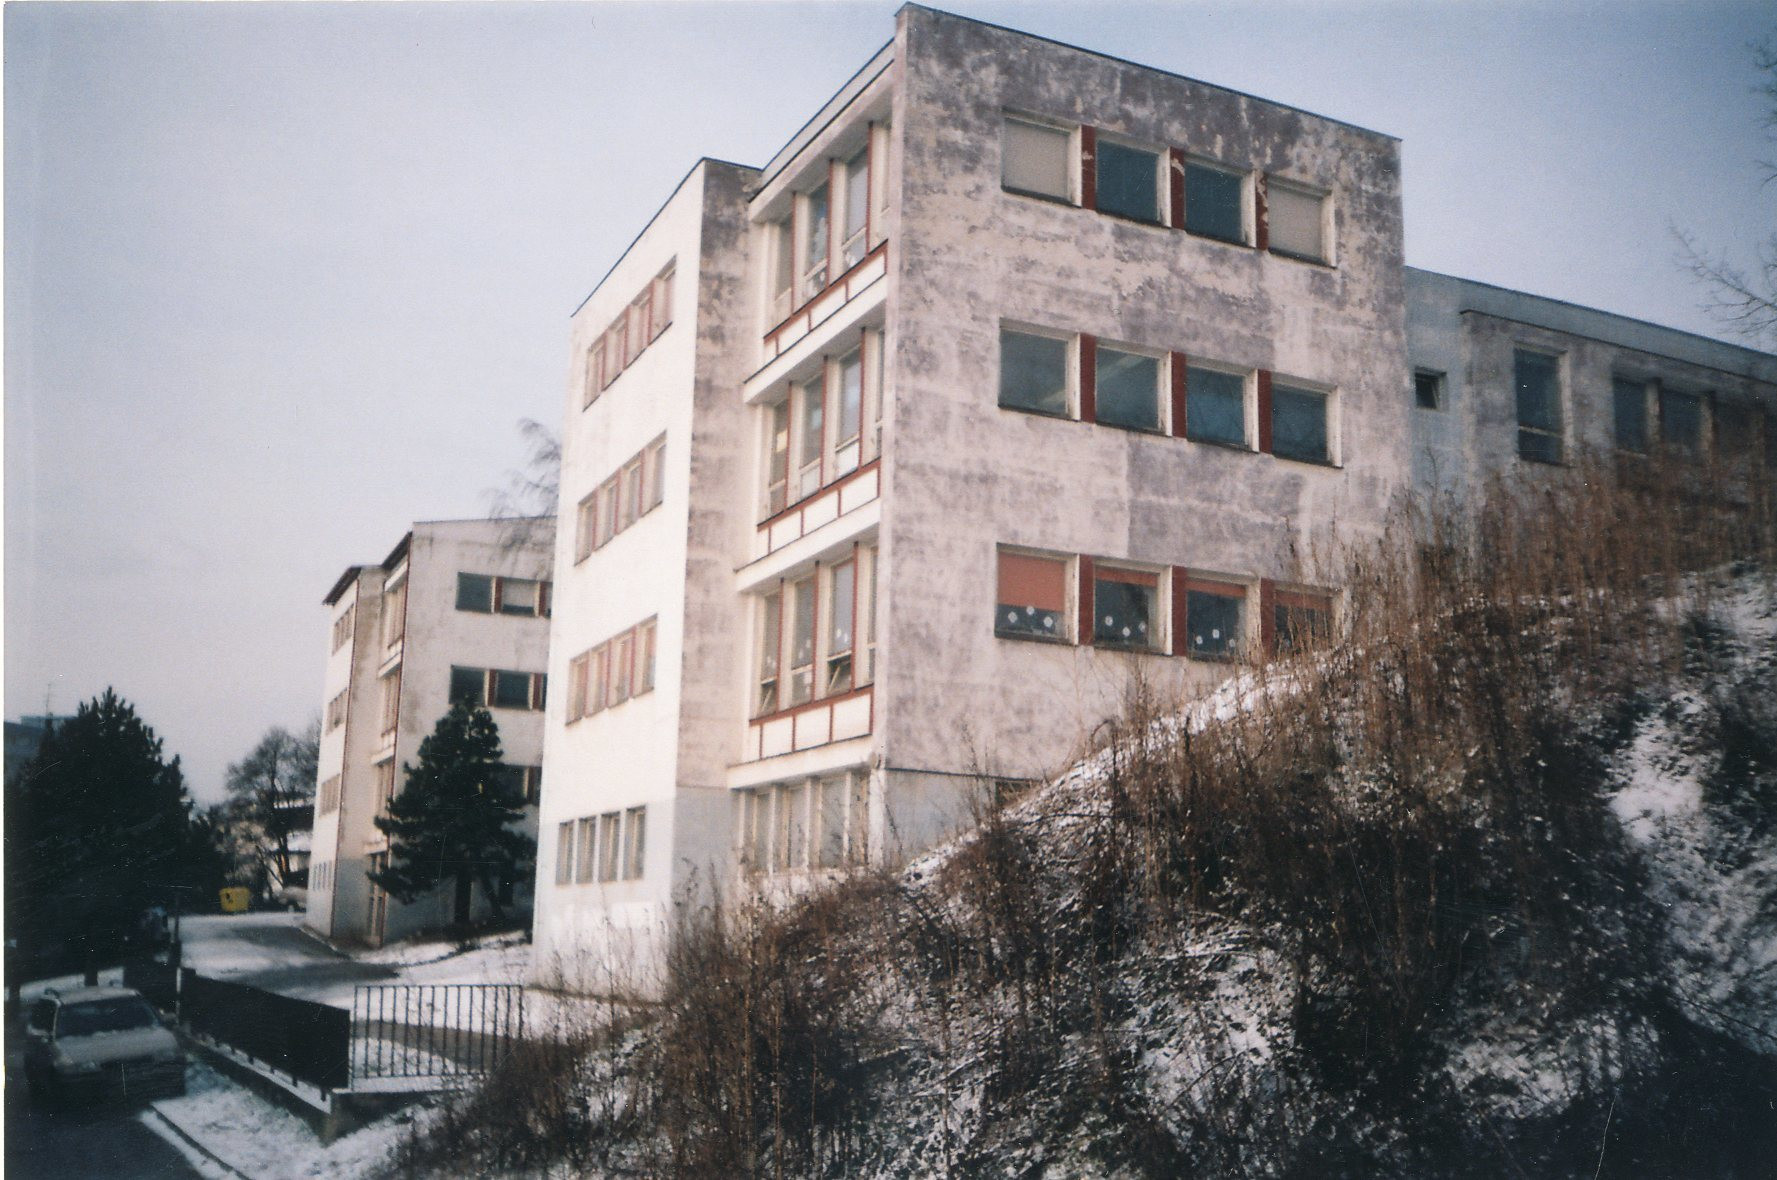 Pavilónová základná škola na Cádrovej ulici na bratislavských Kramároch